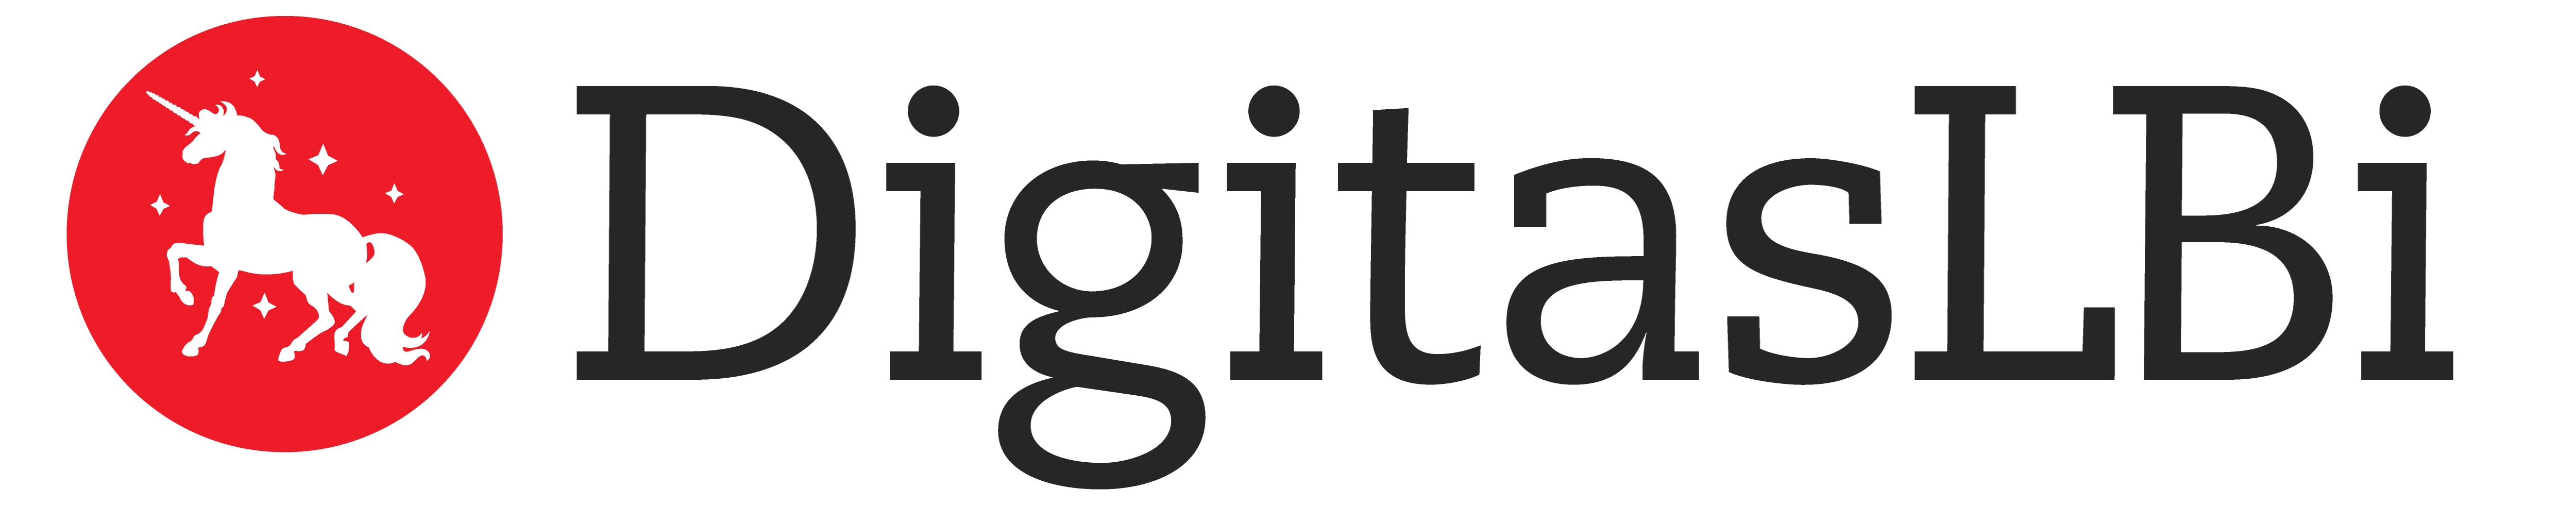 Logo DIGITASLBi